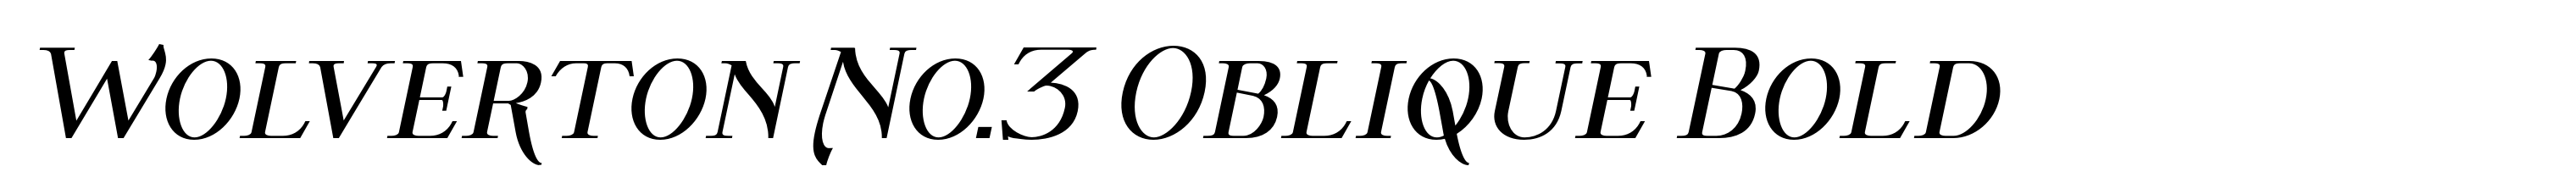 Wolverton No.3 Oblique Bold